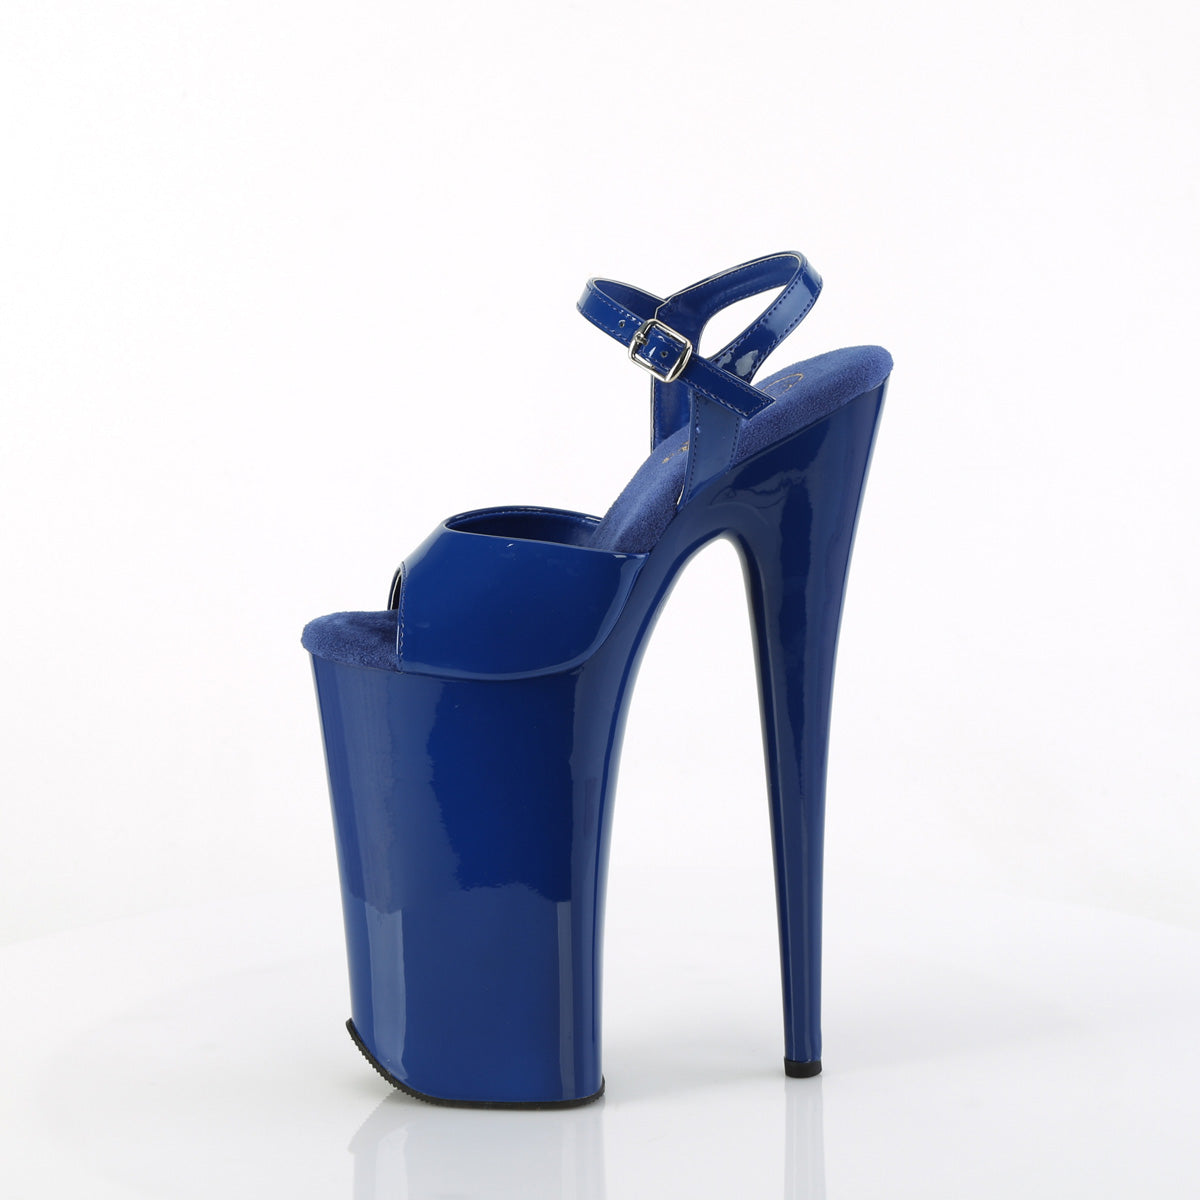 BEYOND-009 Pleaser Royal Blue Patent/Royal Blue Platform Shoes [Extreme High Heels]